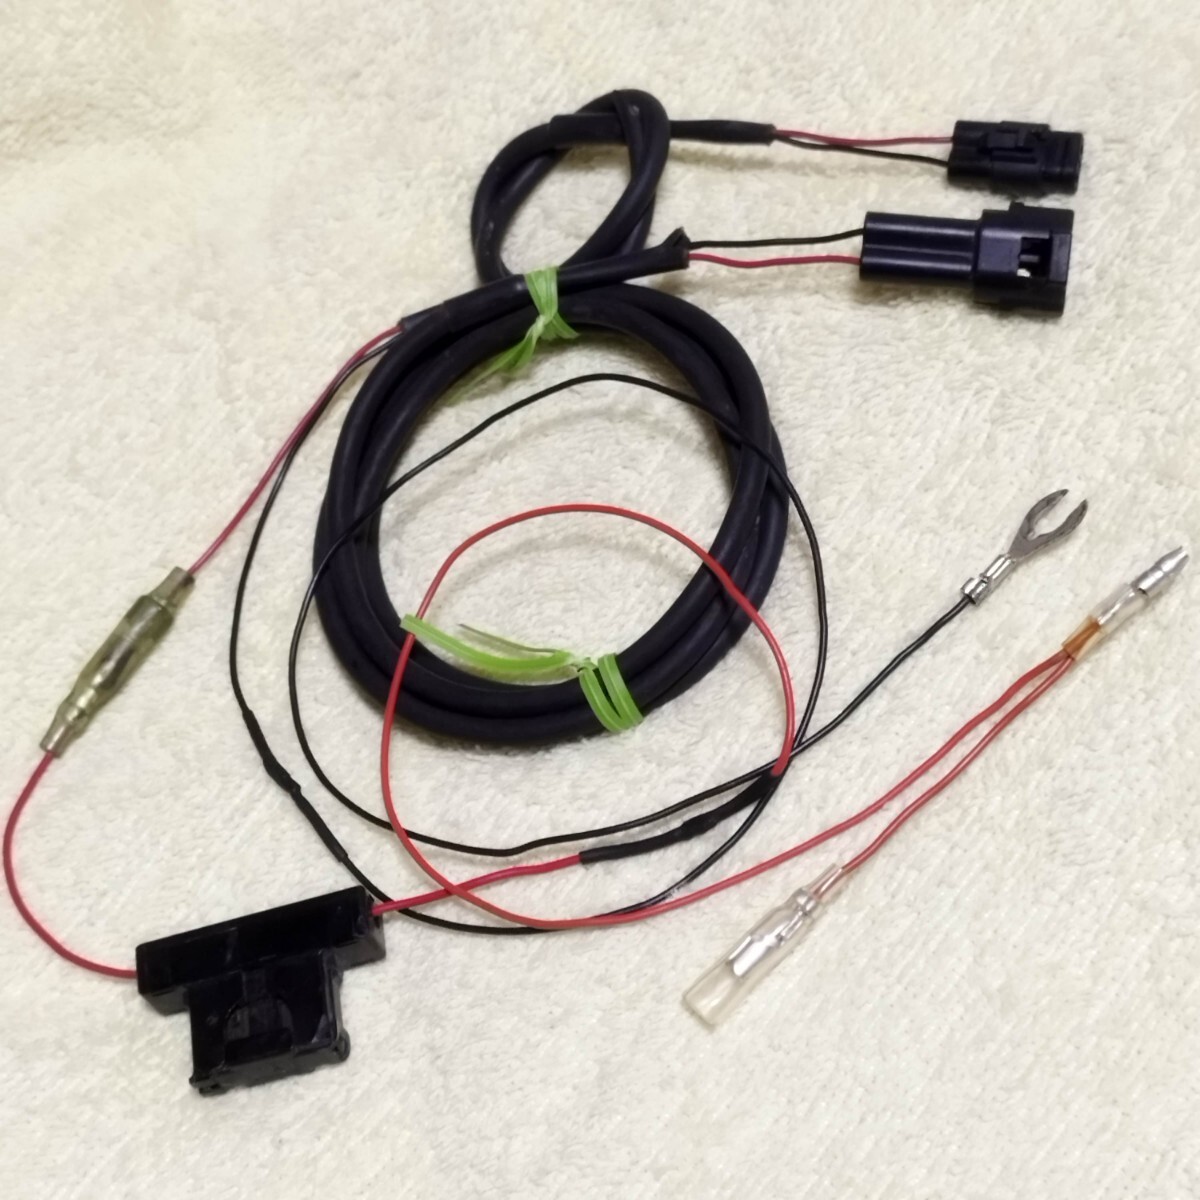  two wheel car exclusive use ETC Mitsuba sun ko-wa made MSC-BE21 for waterproof plug cord ( genuine products ) tip part repair goods 